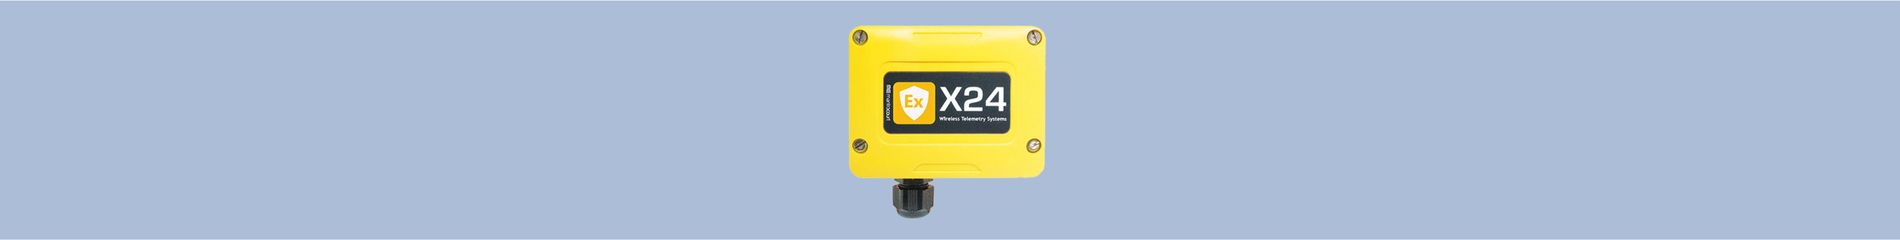 X24-ACMI-SA ATEX Wireless Strain Gauge Transmitter Module